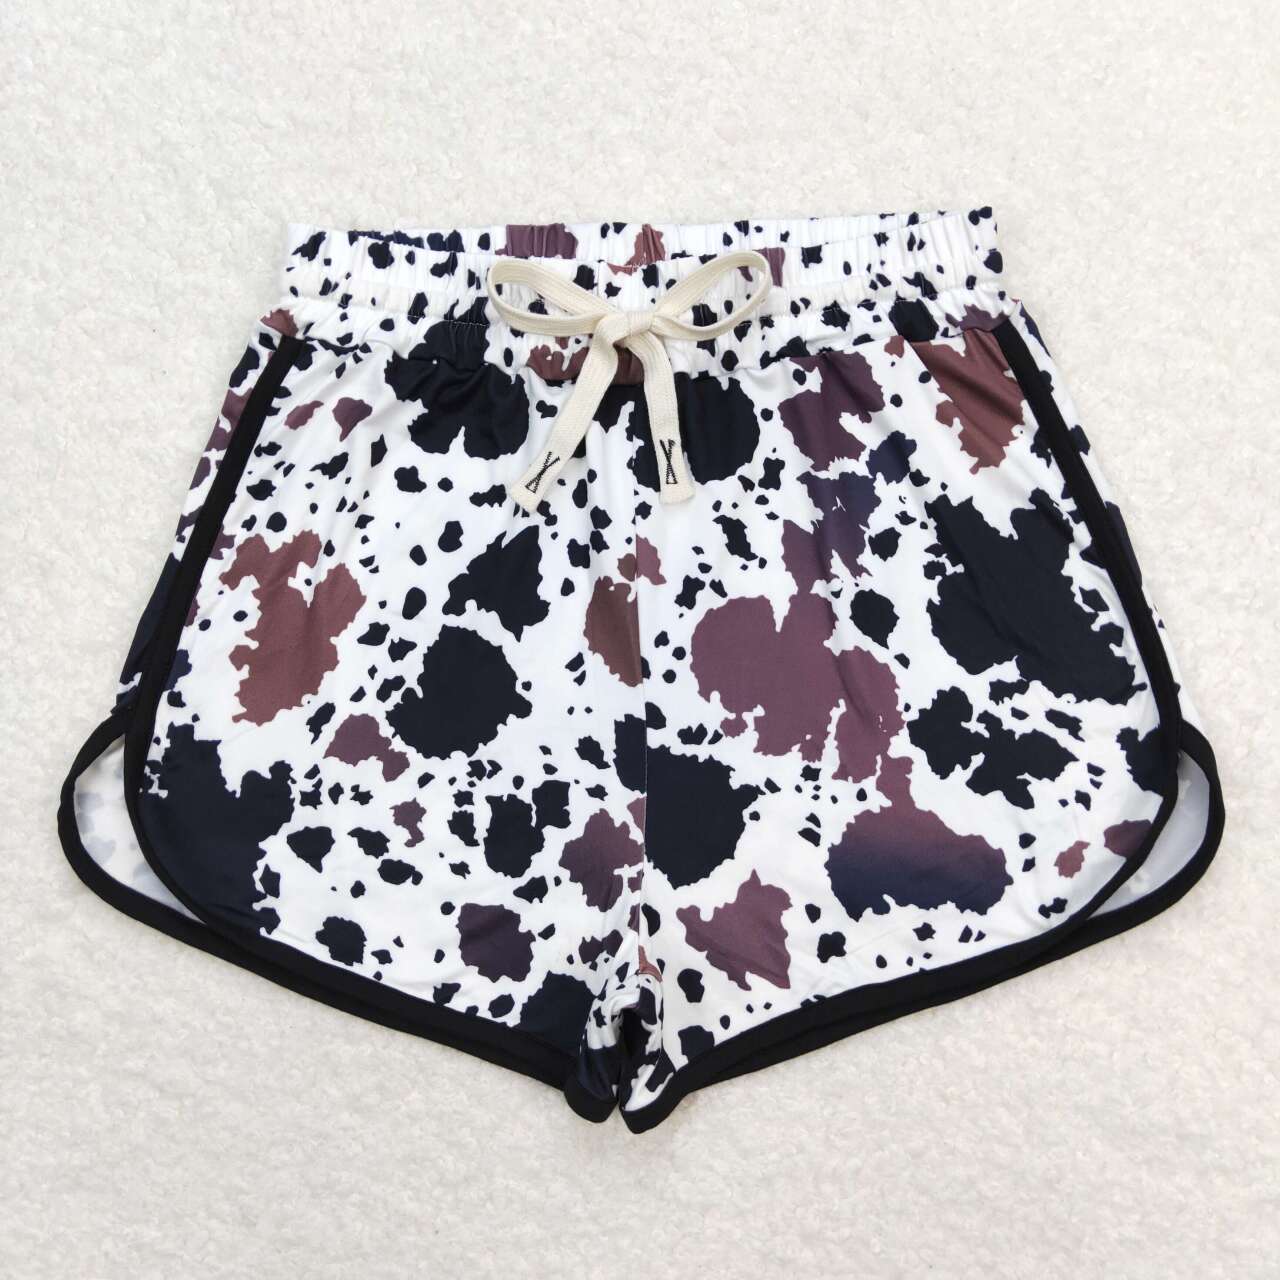 SS0221 Adult Black Cow Print Woman Summer Shorts